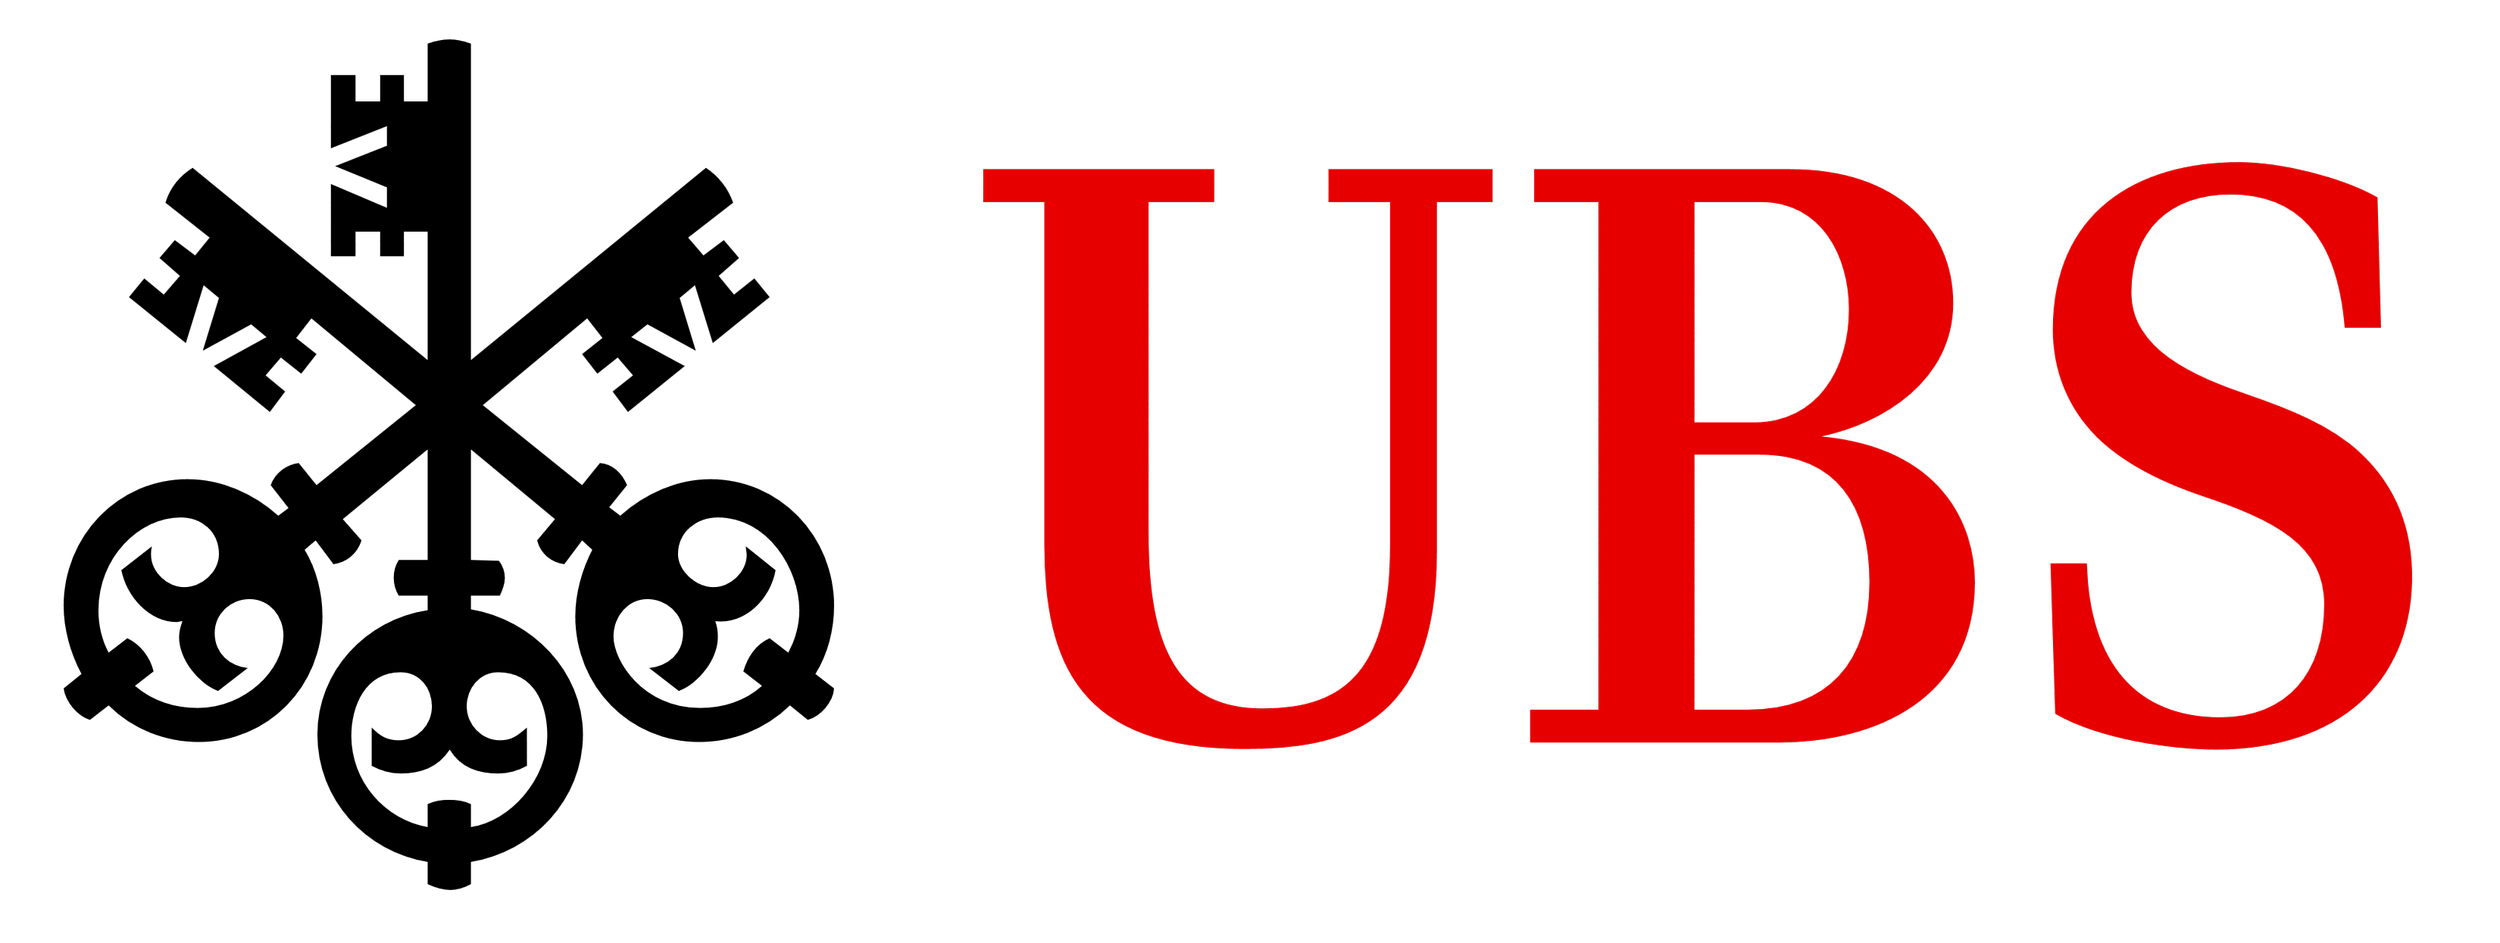 Ubs_logo_PNG1.png